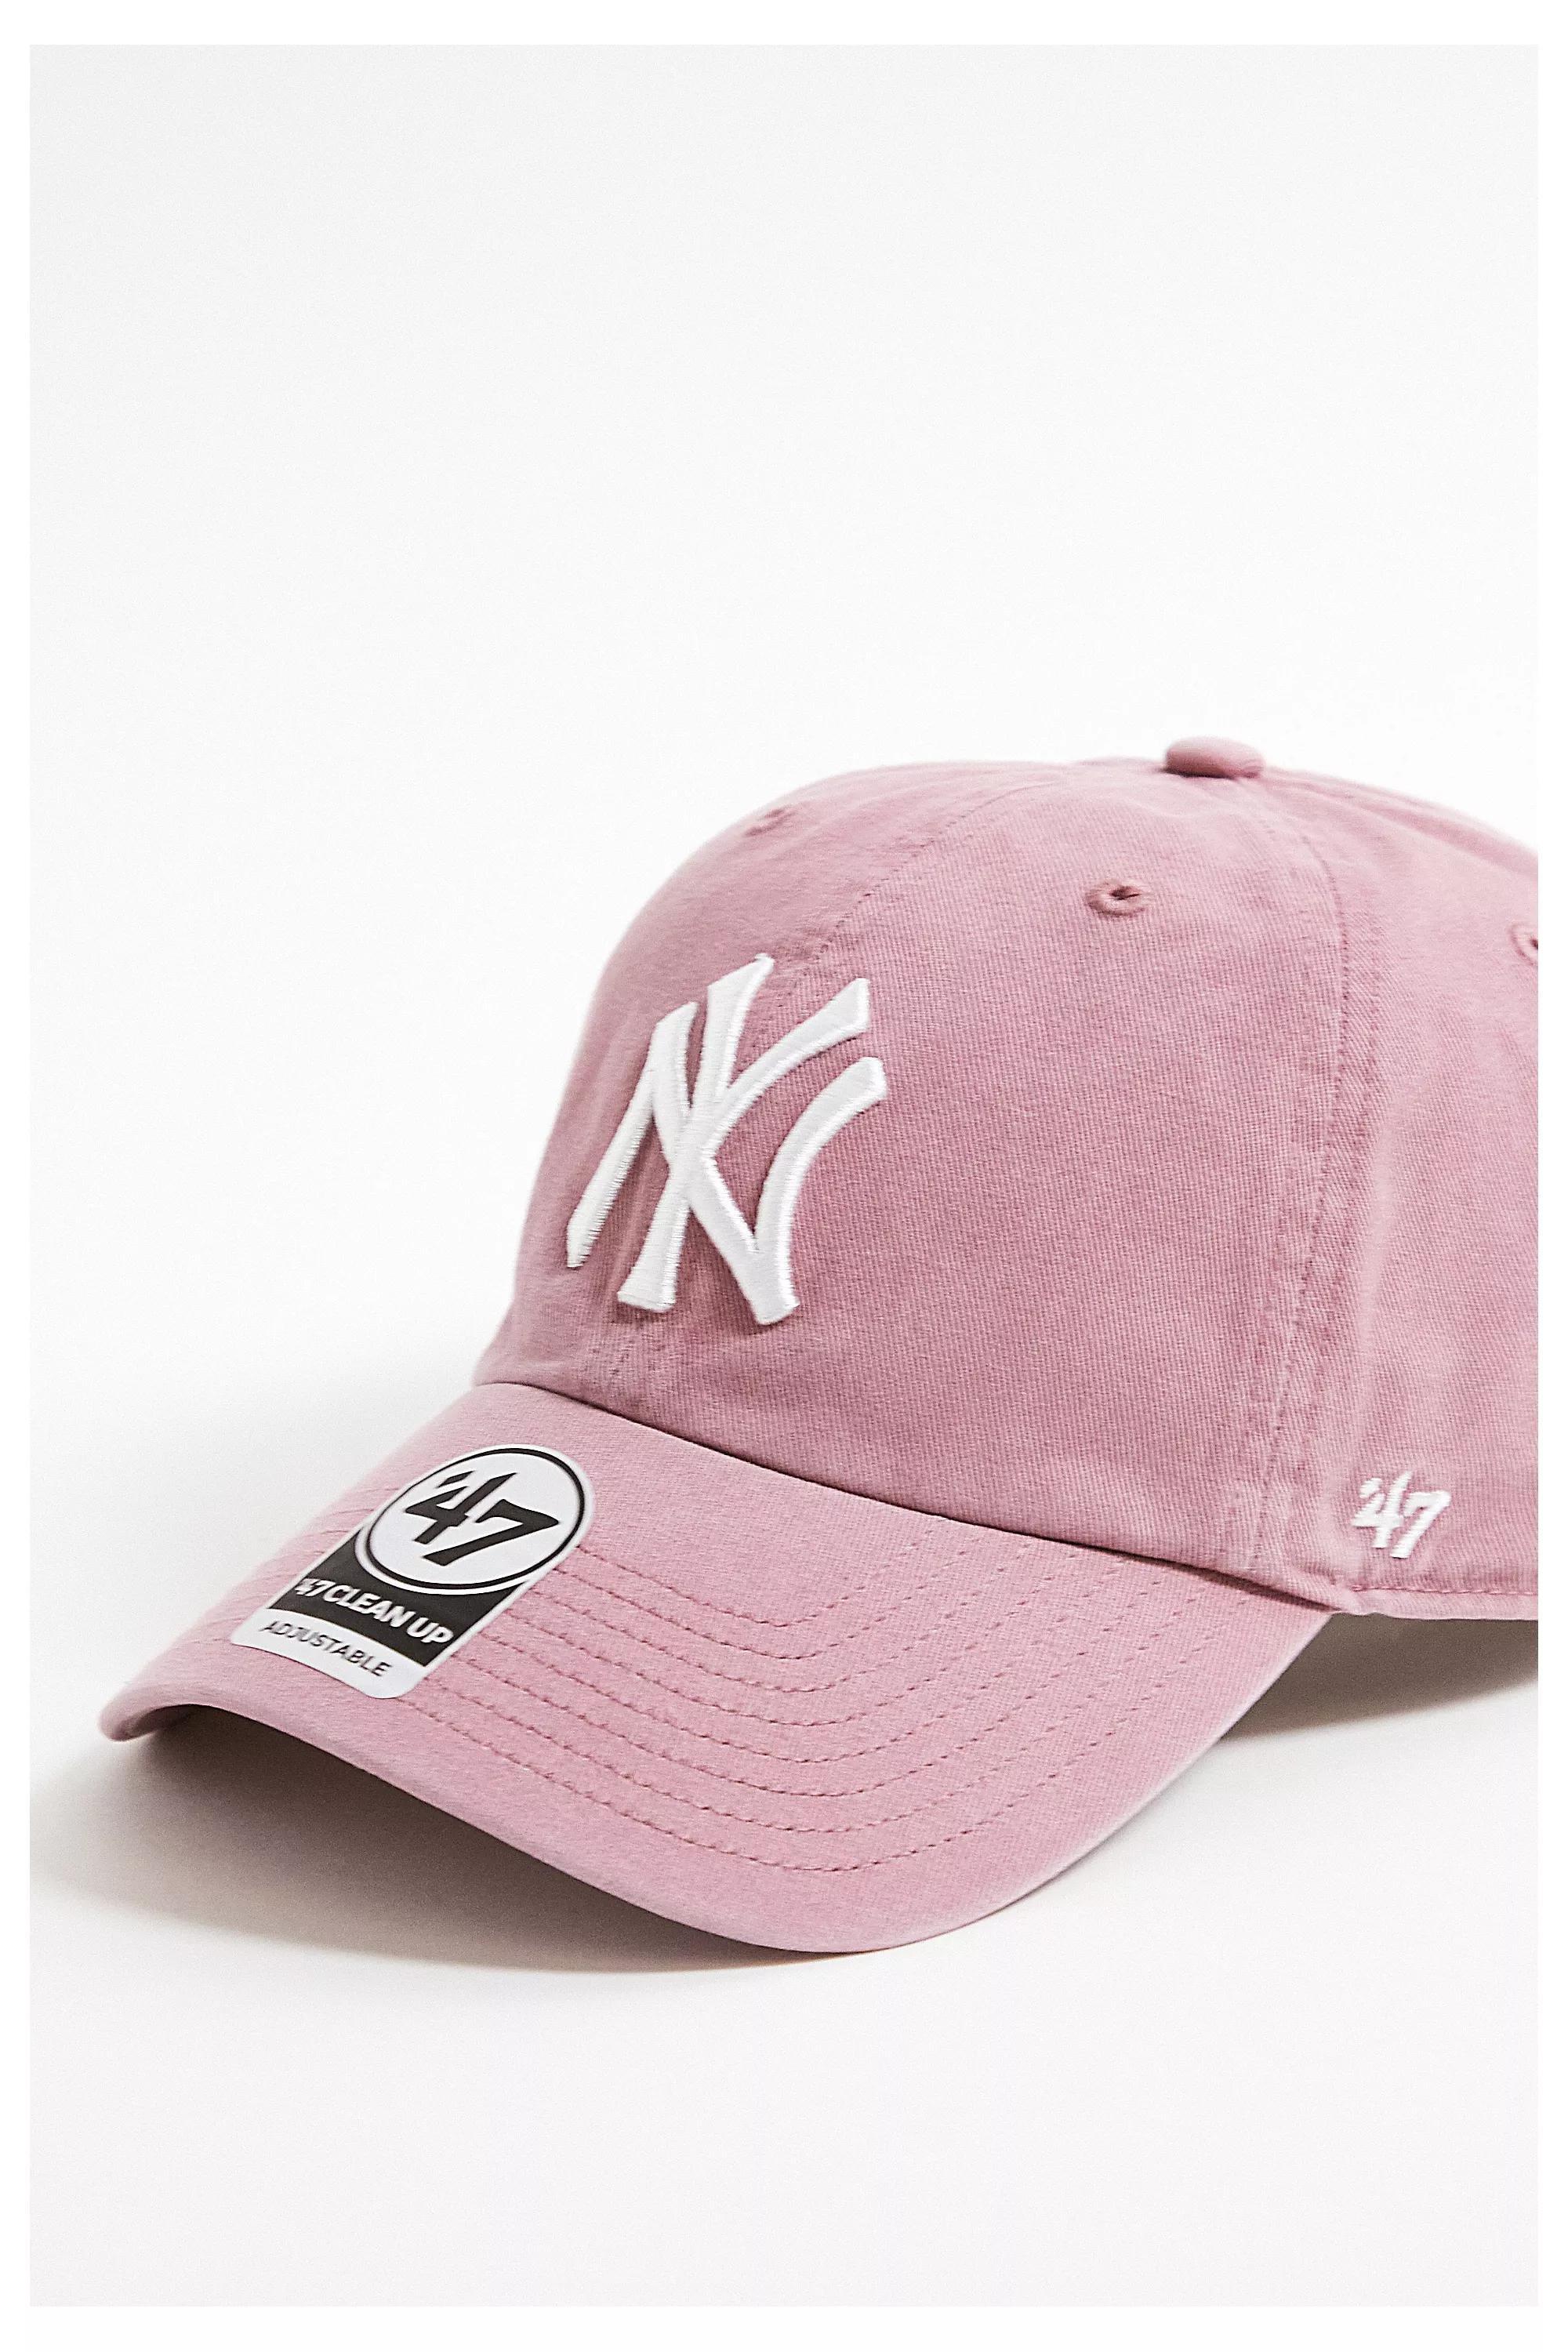 Urban Outfitters - Pink 47 Ny Yankees Baseball Cap